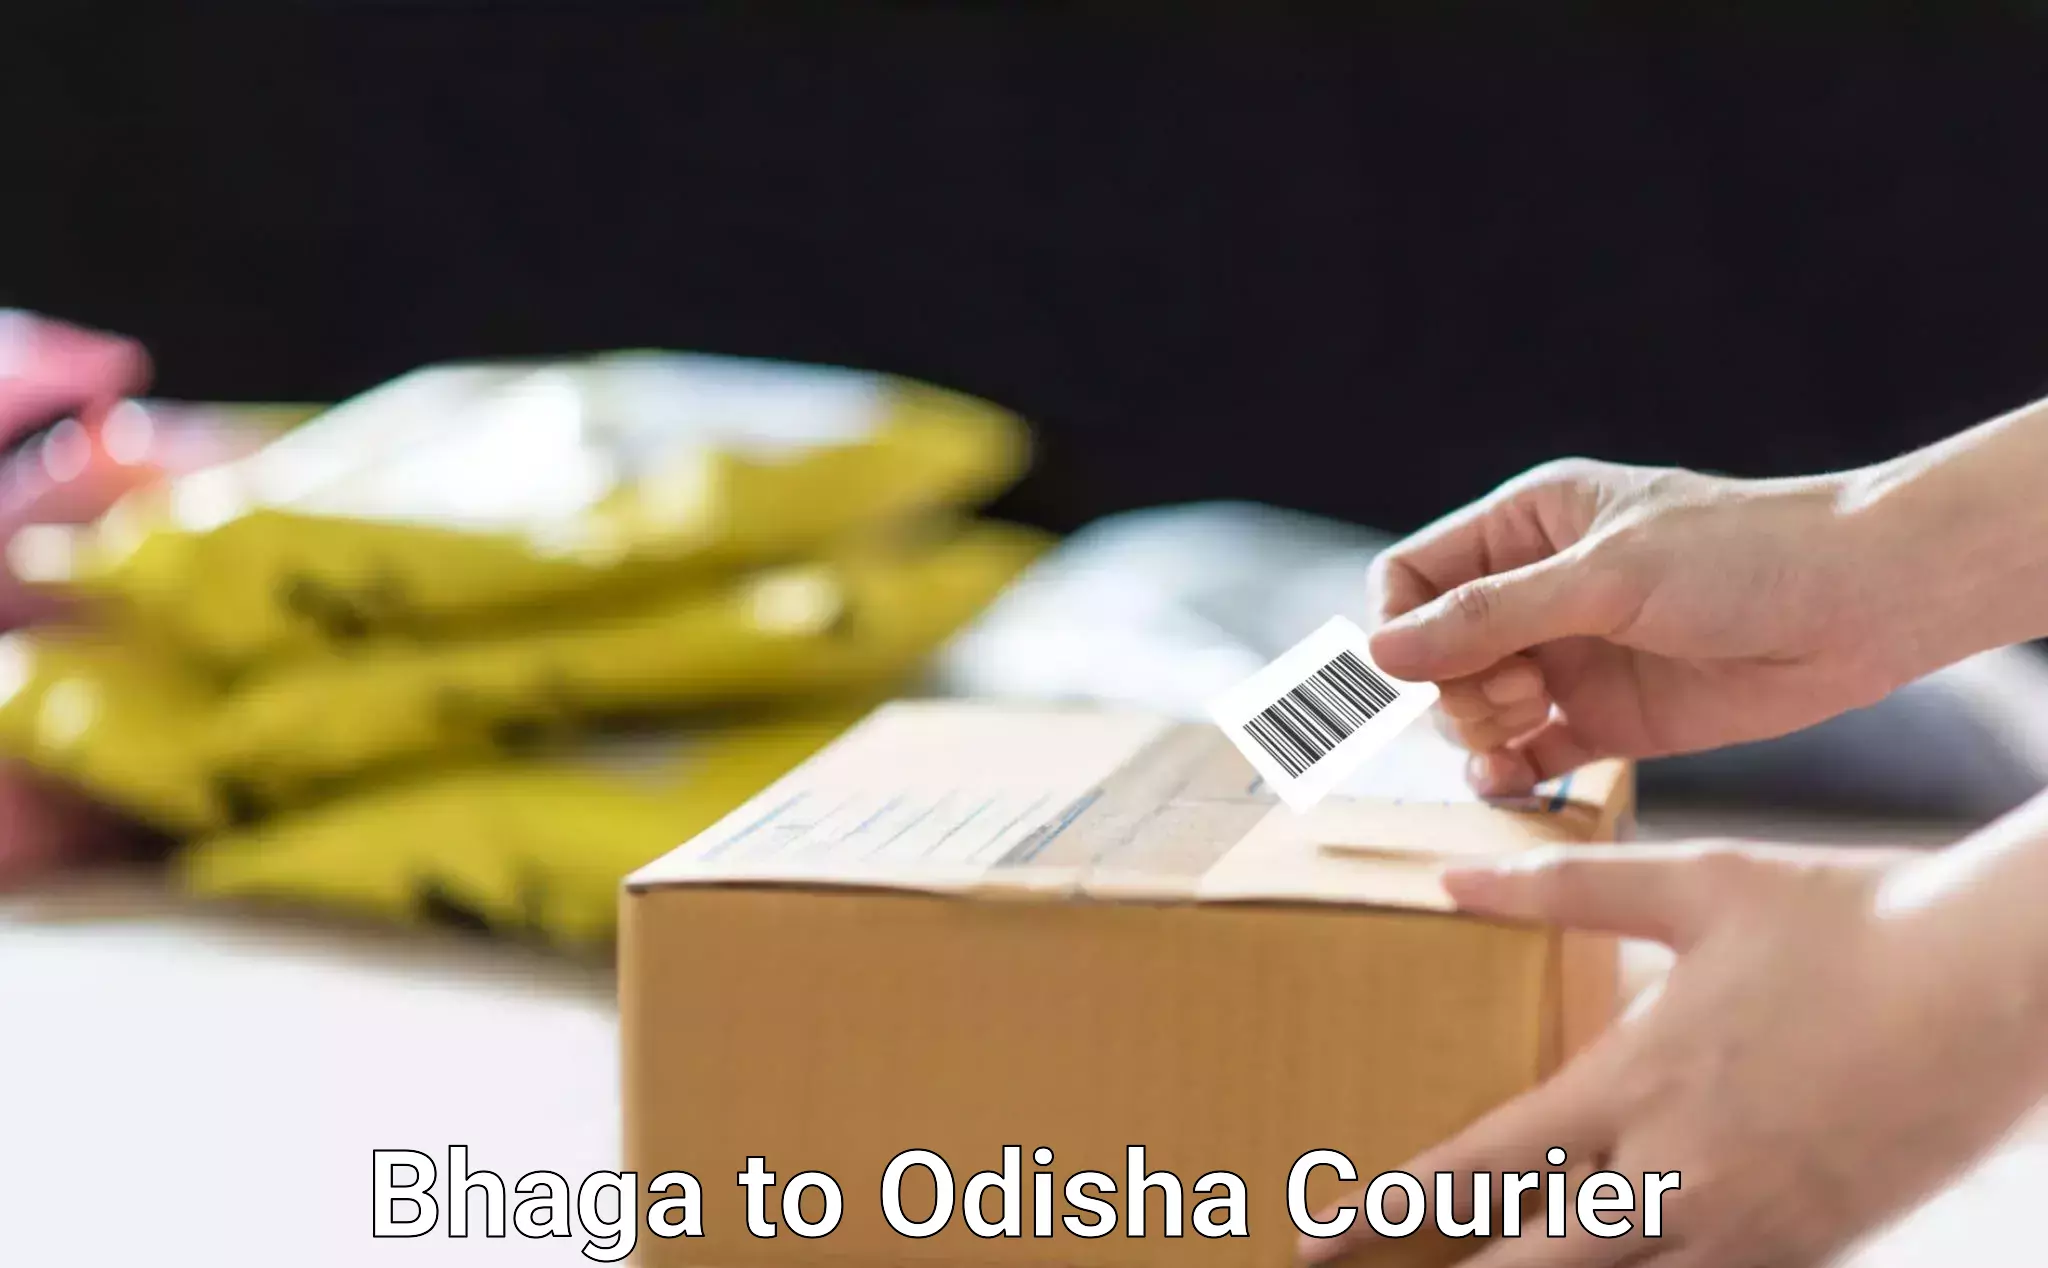 Global logistics network Bhaga to Odisha